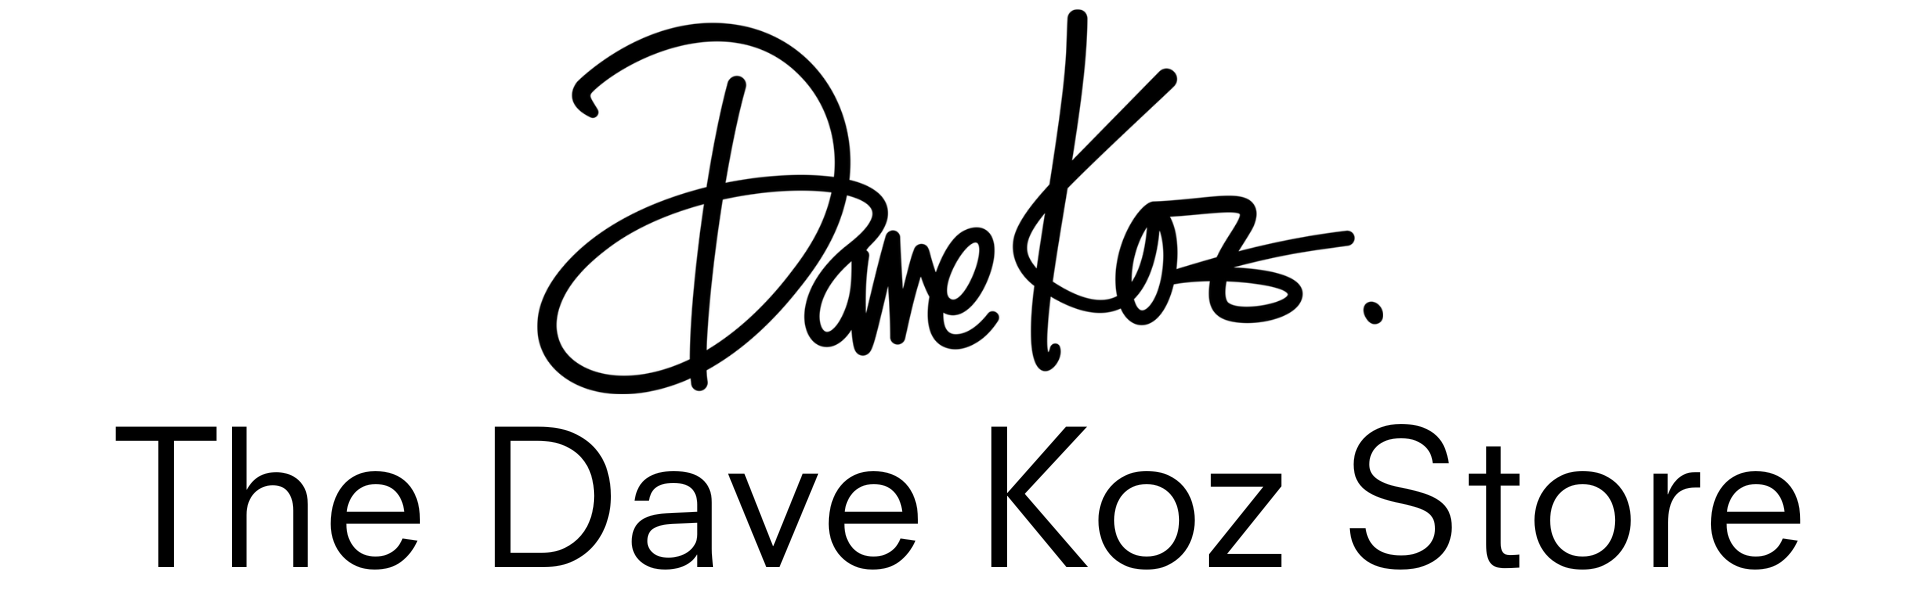 The Dave Koz Store logo